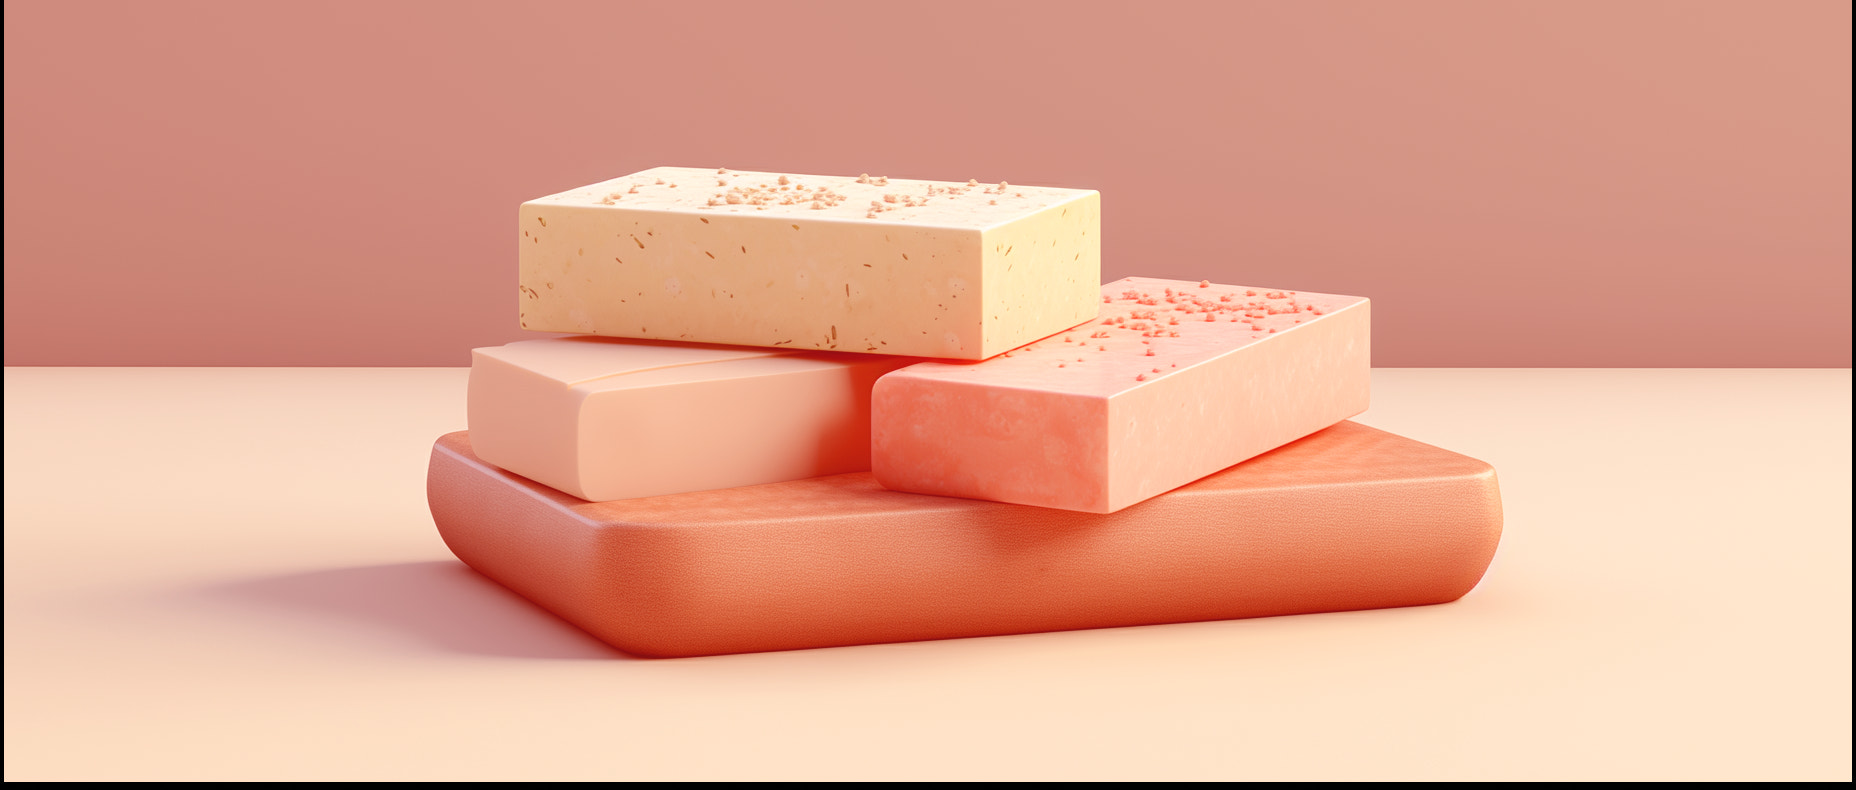 Soap Making Kit Natural Exfoliants